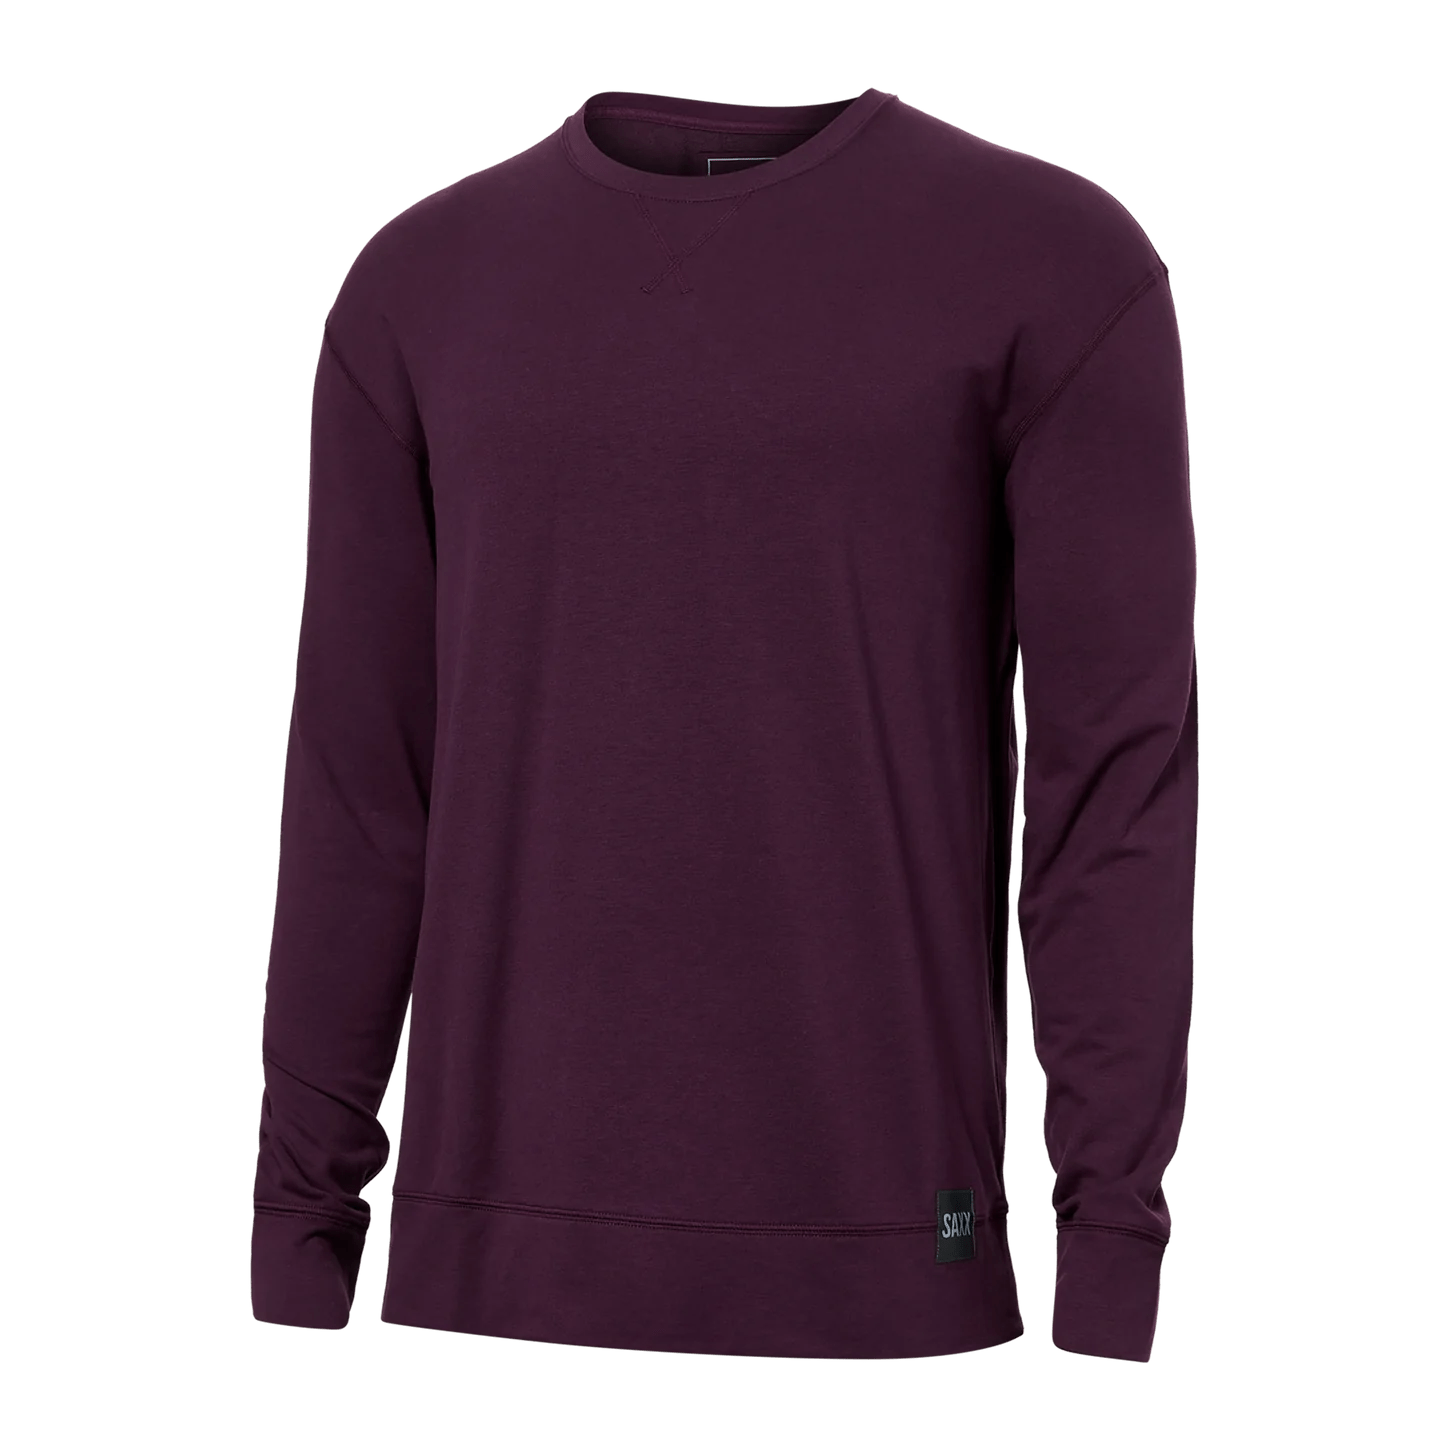 3SIX FIVE Sweatshirt - Plum - Blue Sky Fashions & Lingerie